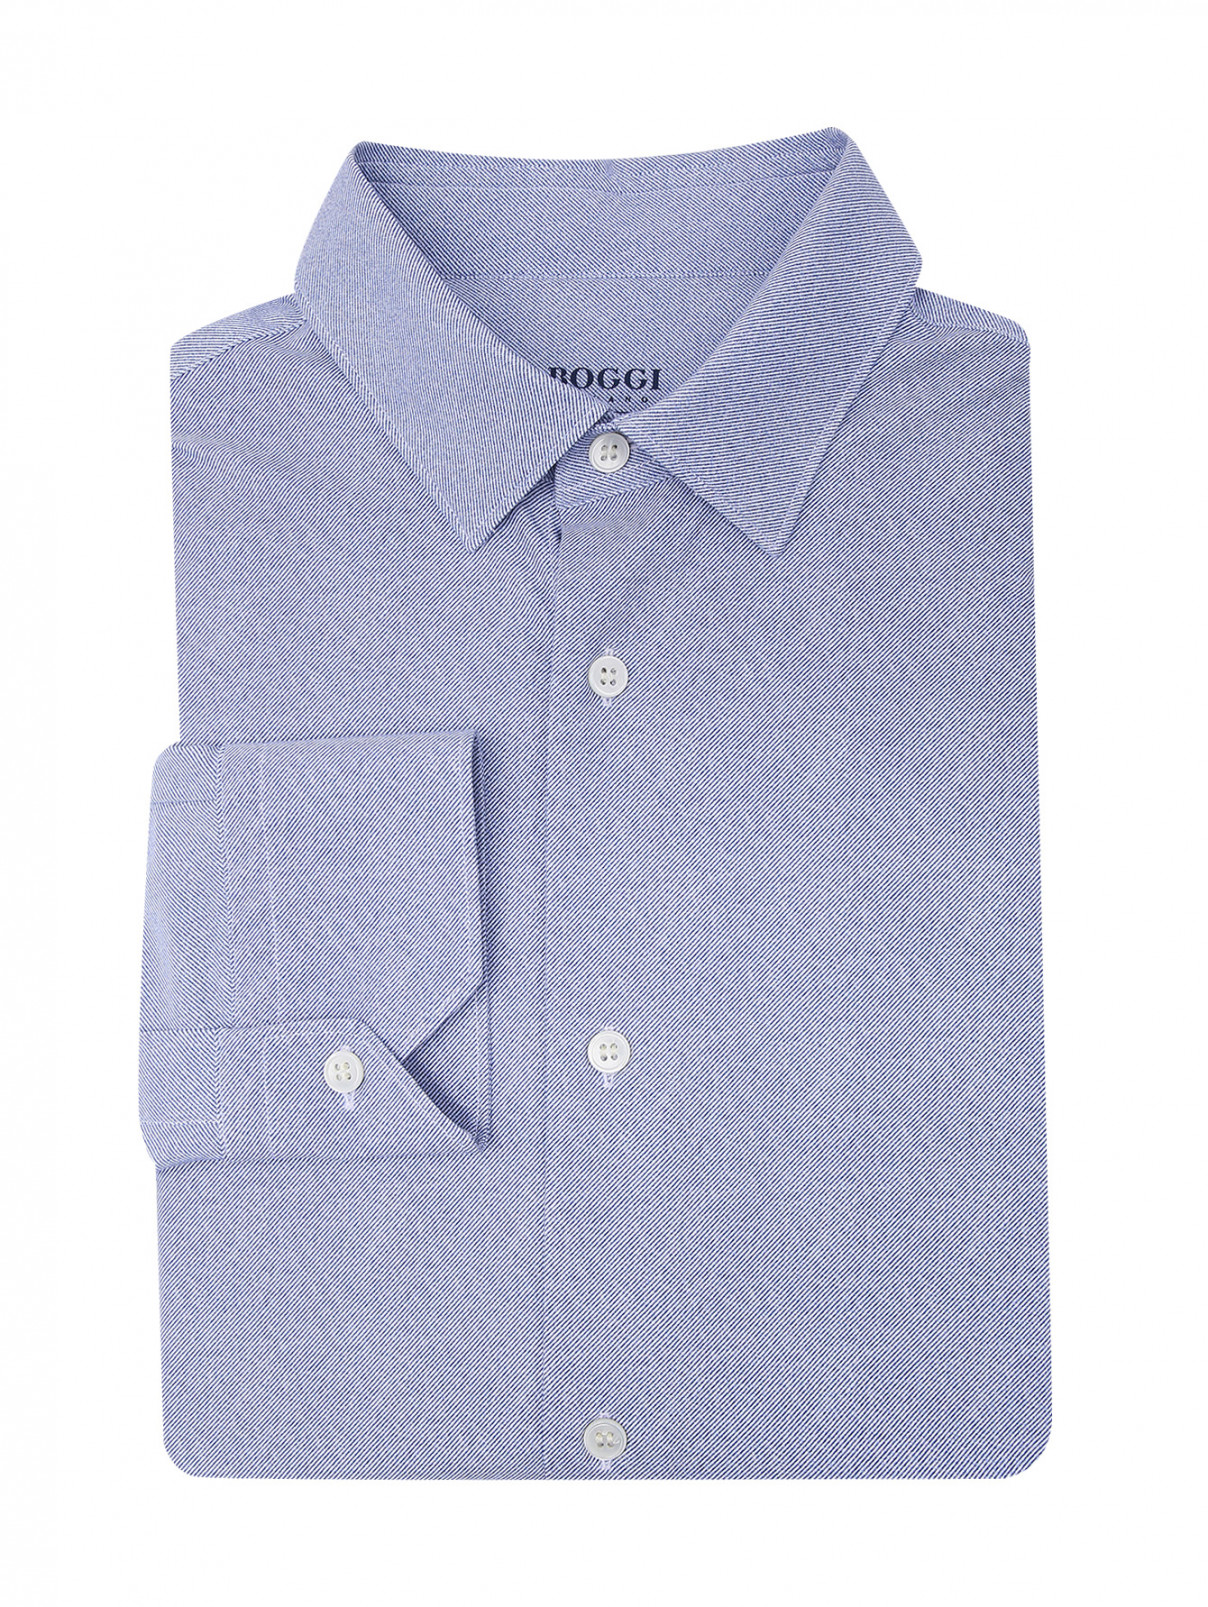 Рубашка на пуговицах Boggi  –  Общий вид  – Цвет:  Синий